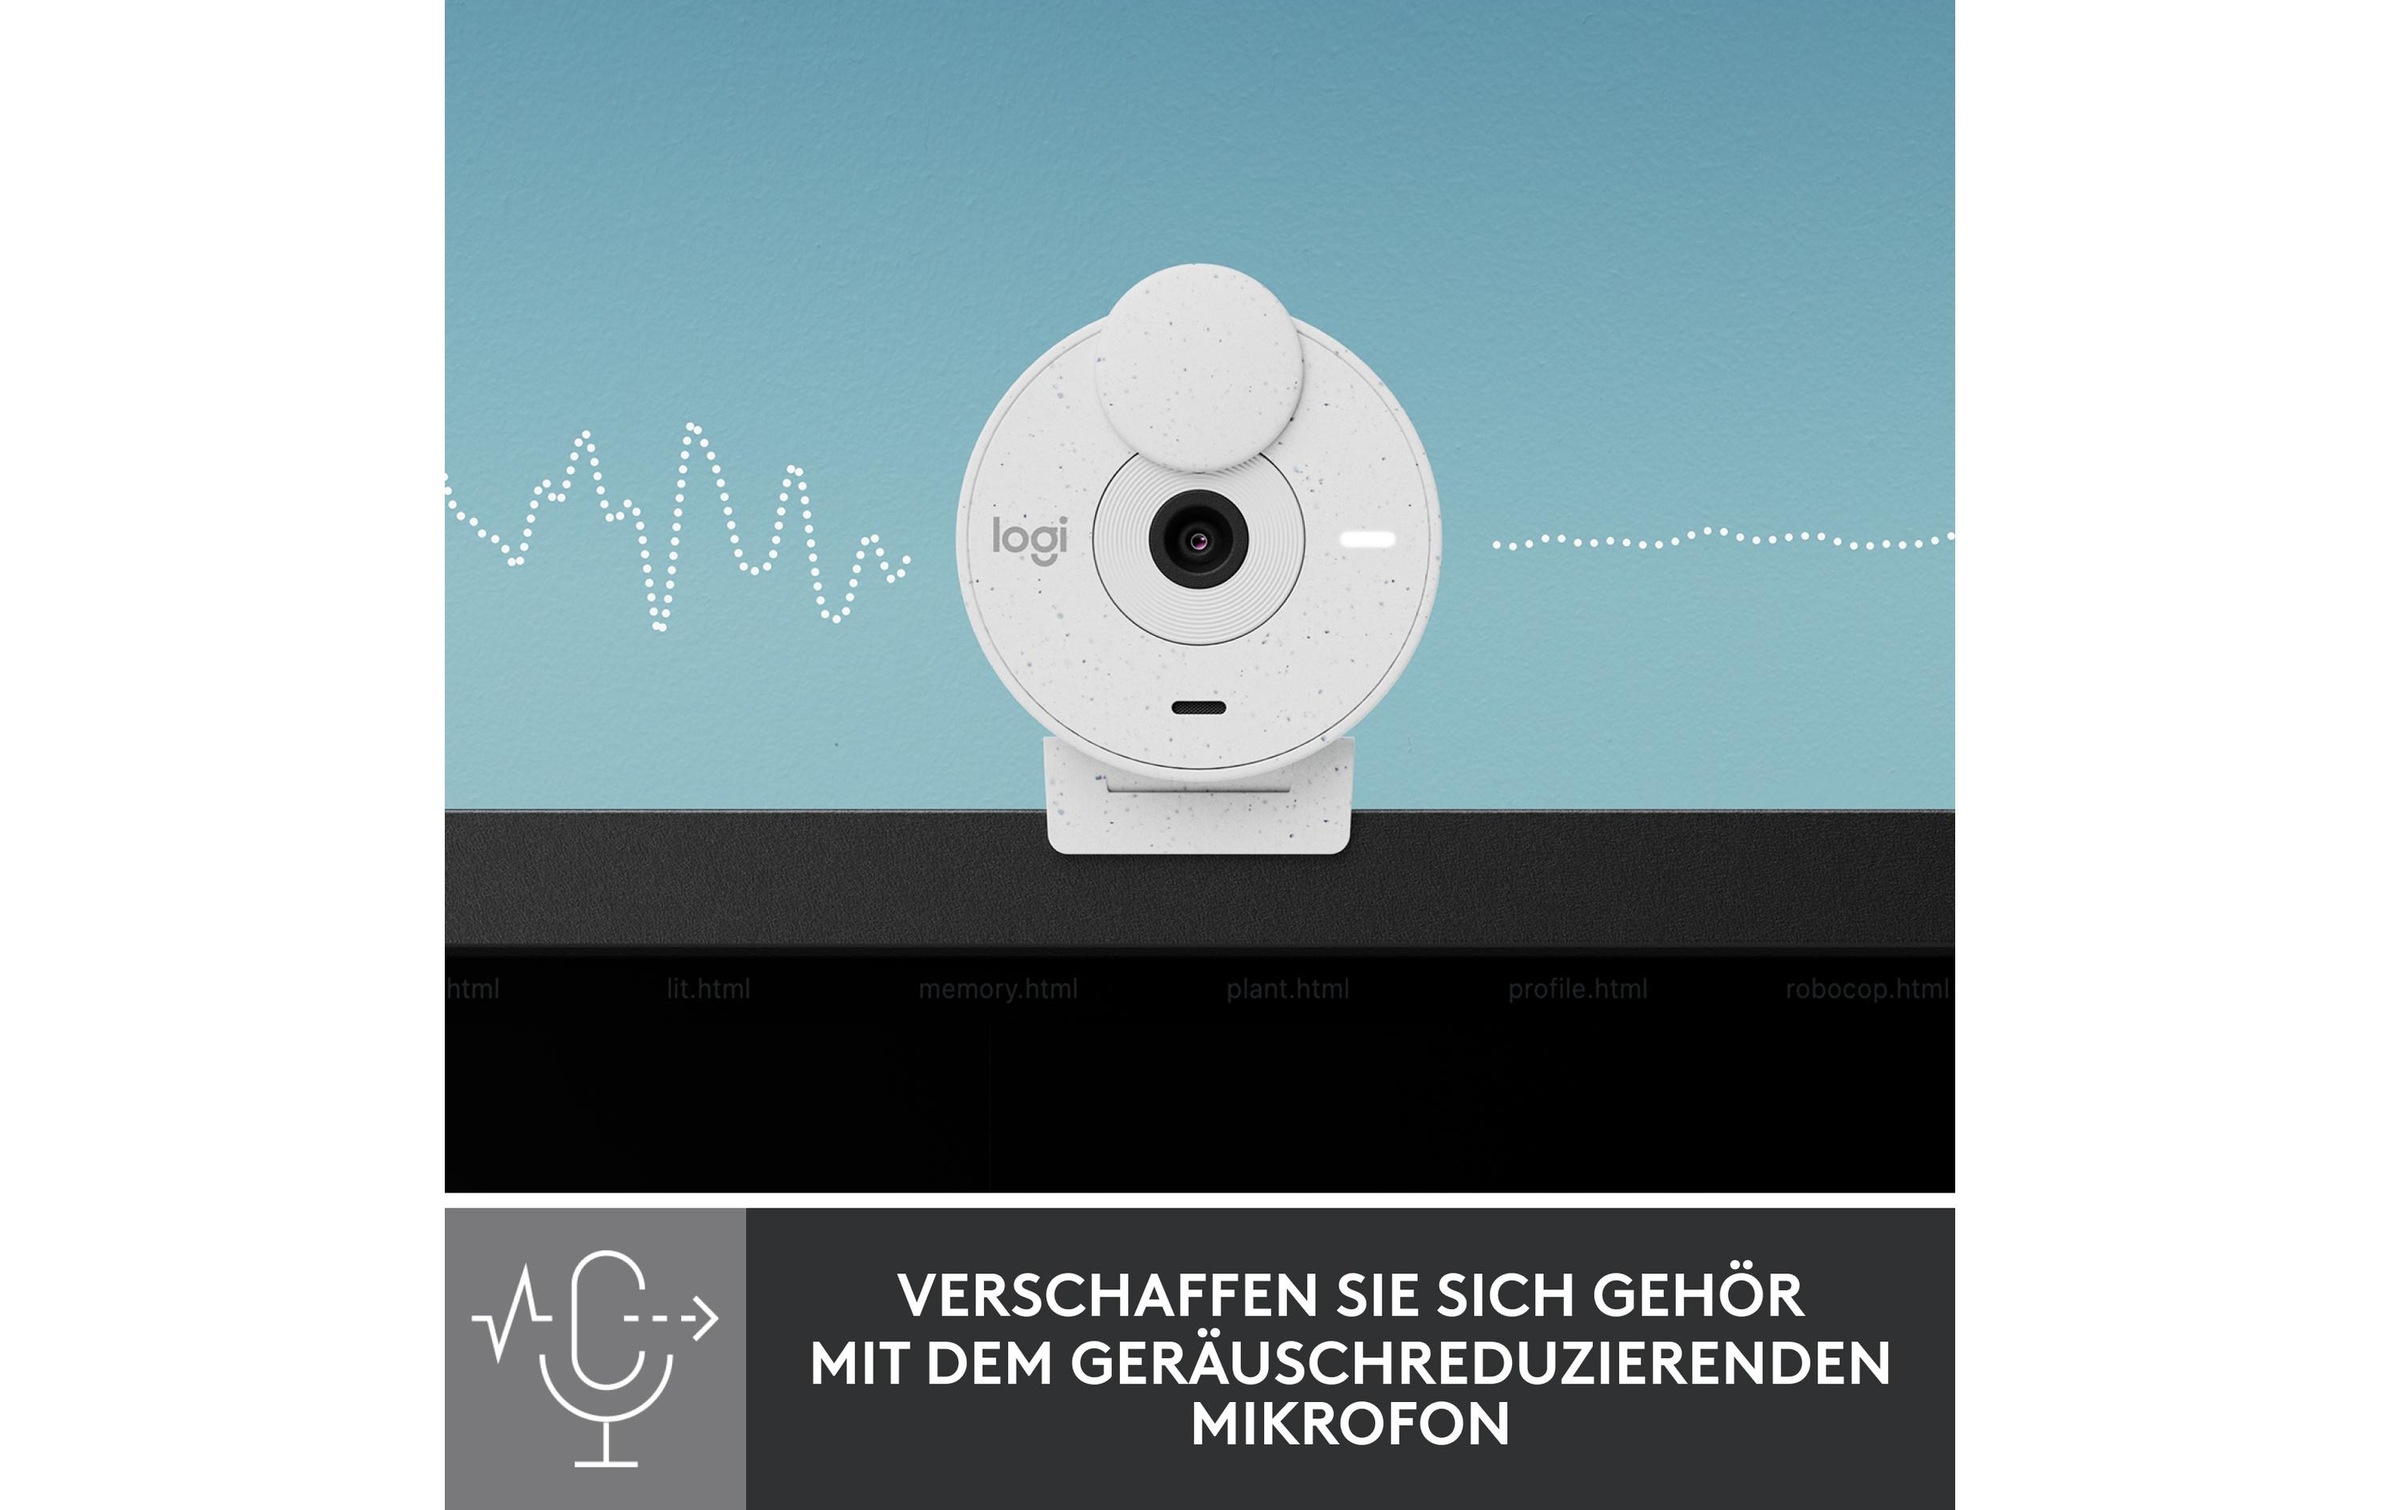 Webcam »Brio white«